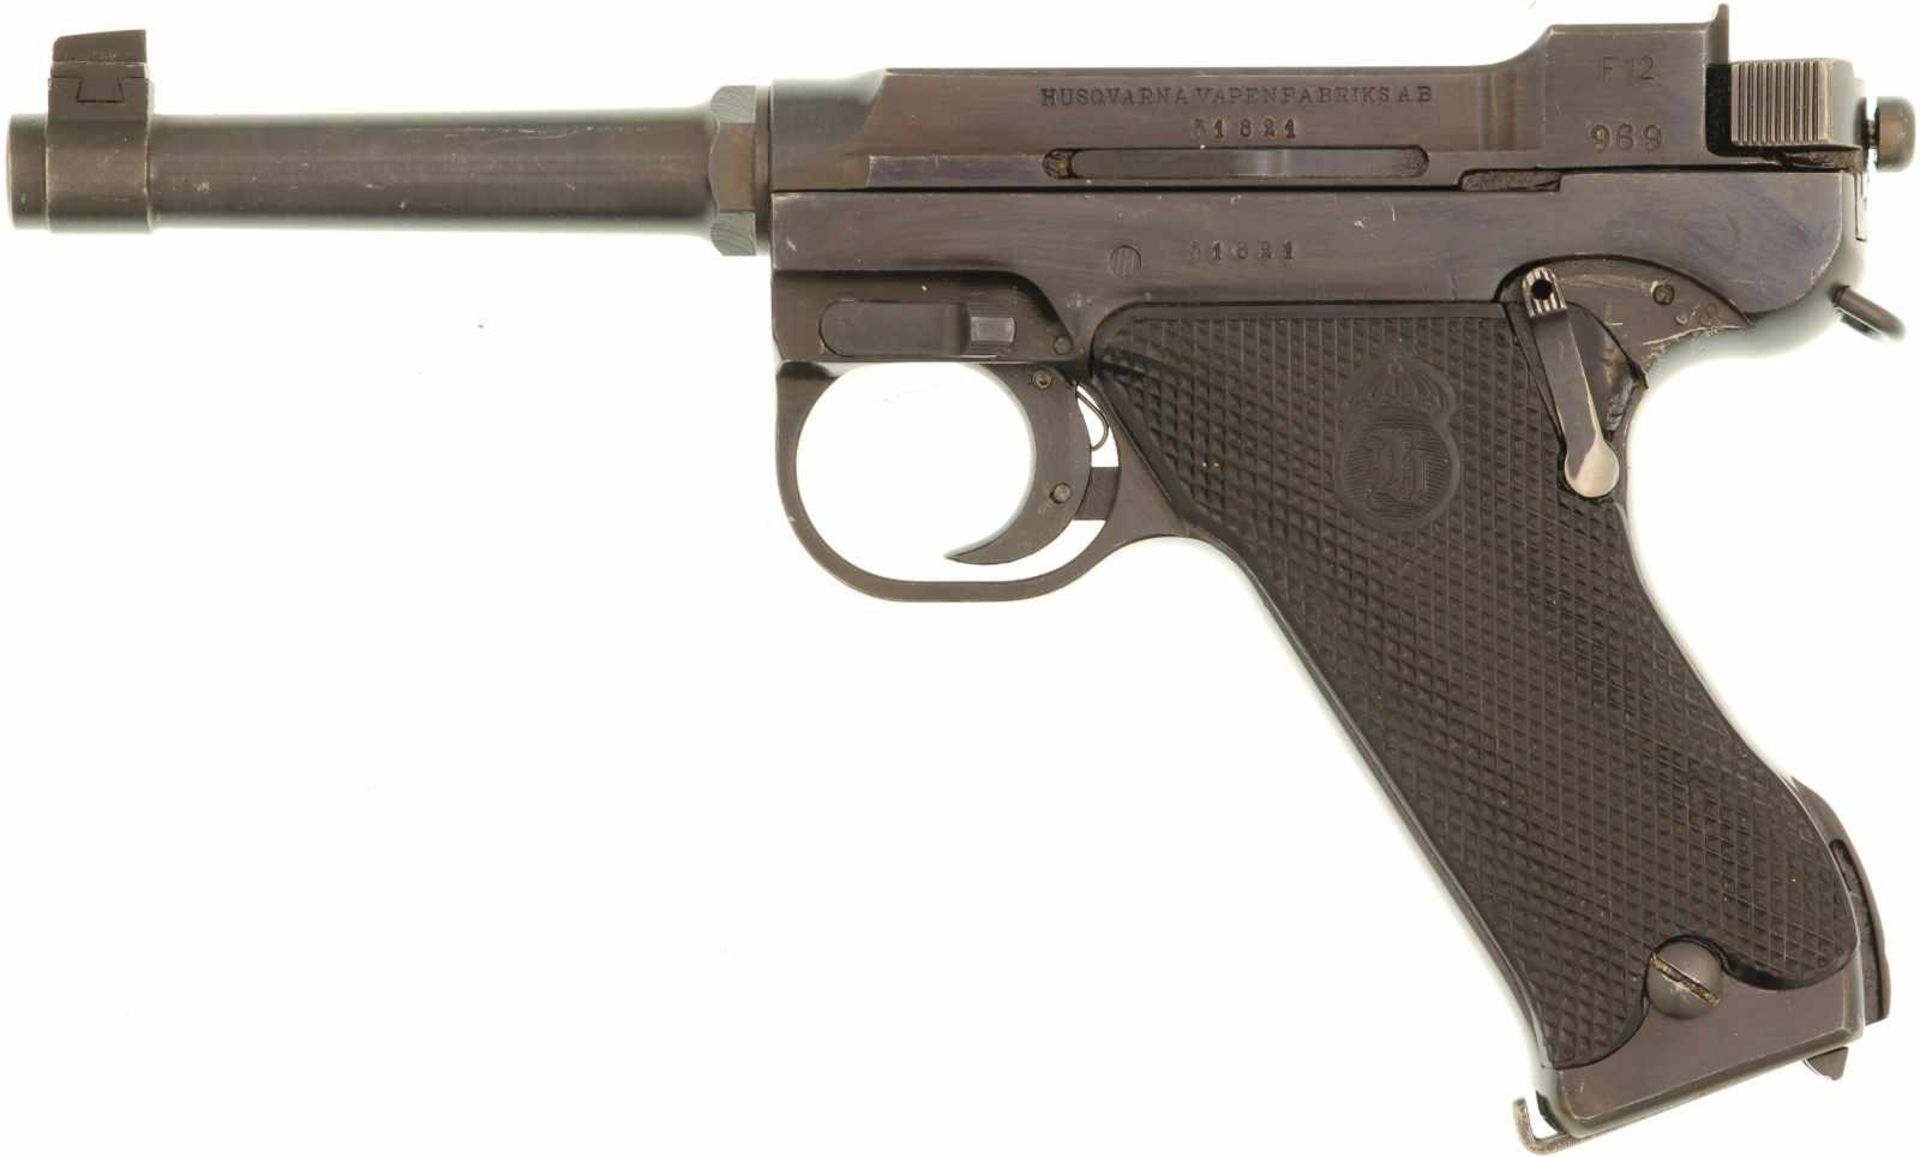 Pistole, Husqvarna "Lathi" m/40, Kal. 9mmP@ Brünierte Ganzstahlwaffe mit SA-Abzug. Seitlich